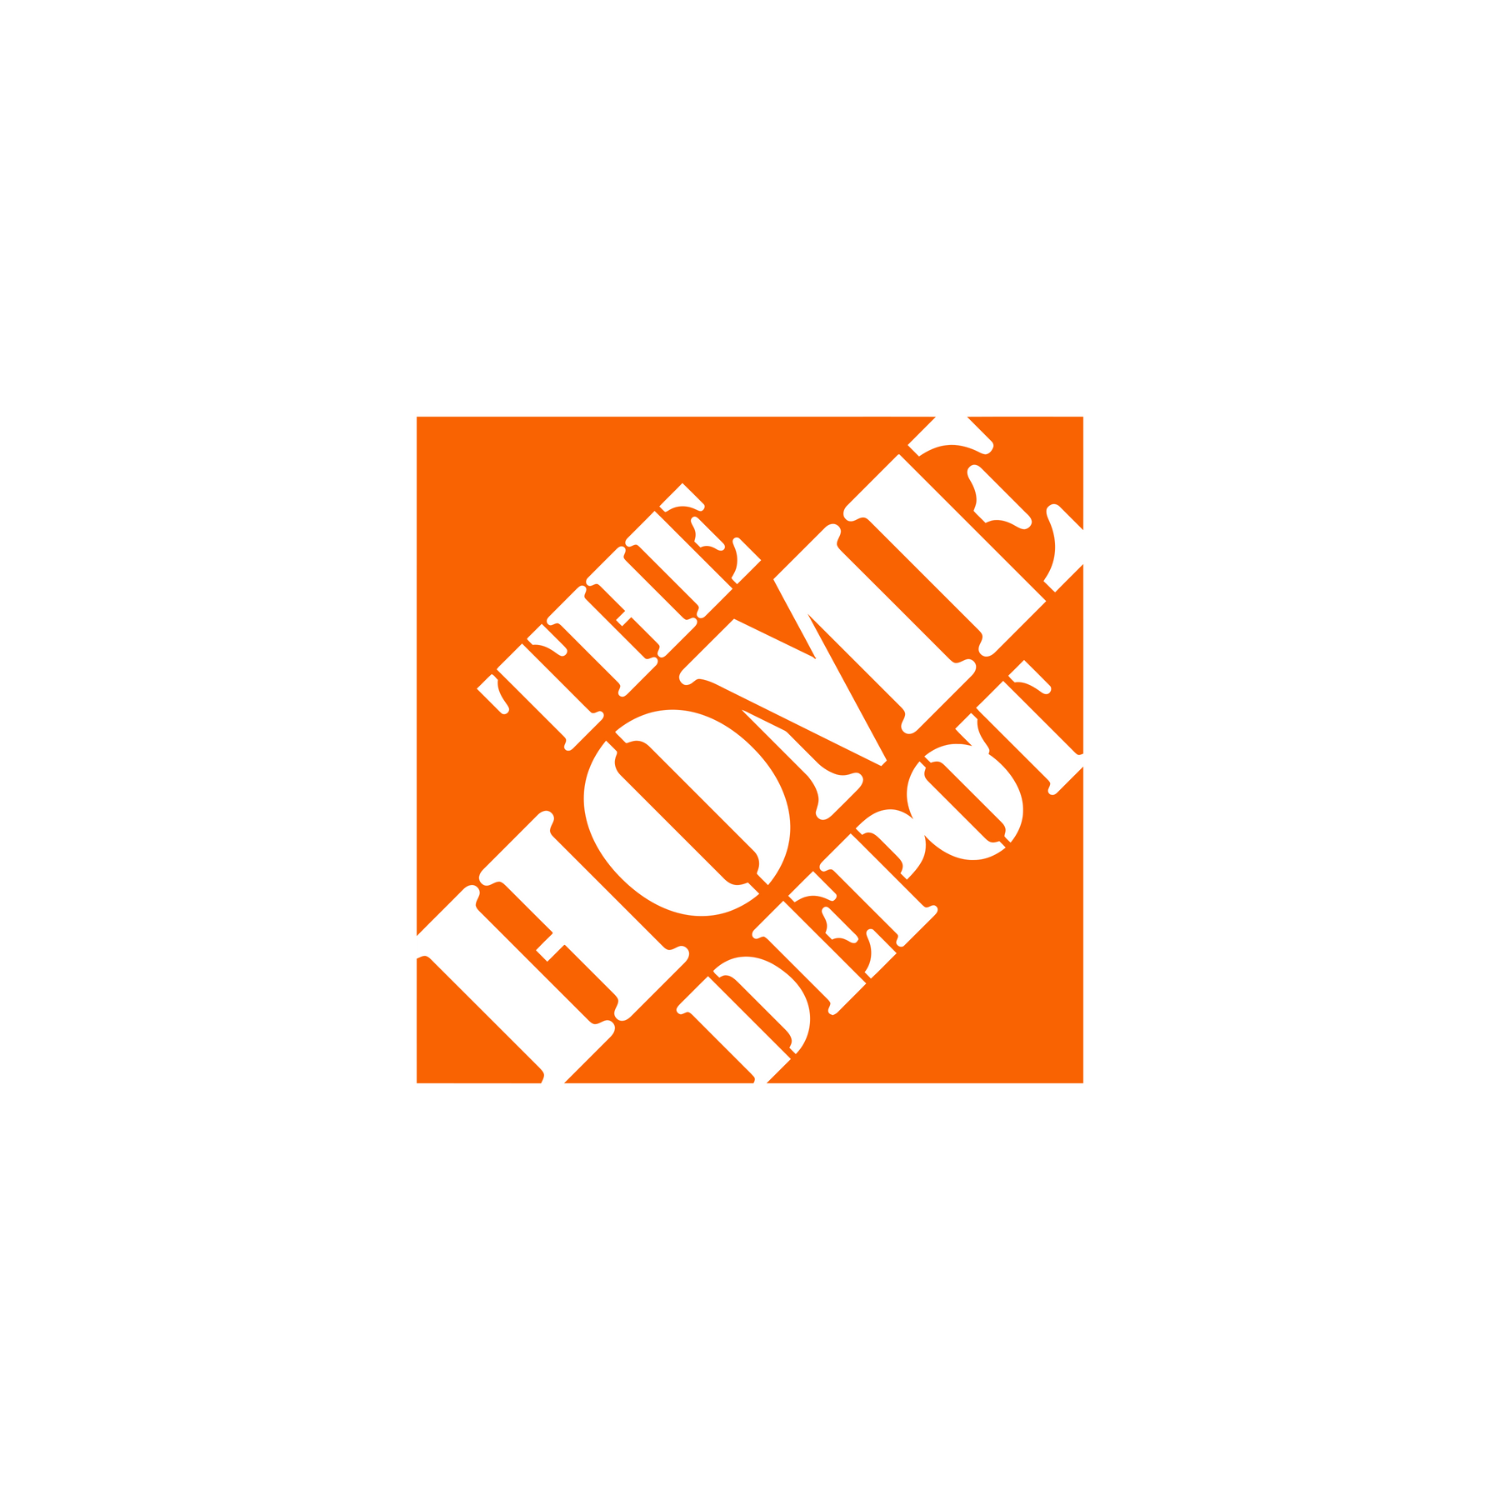 The home depot logo